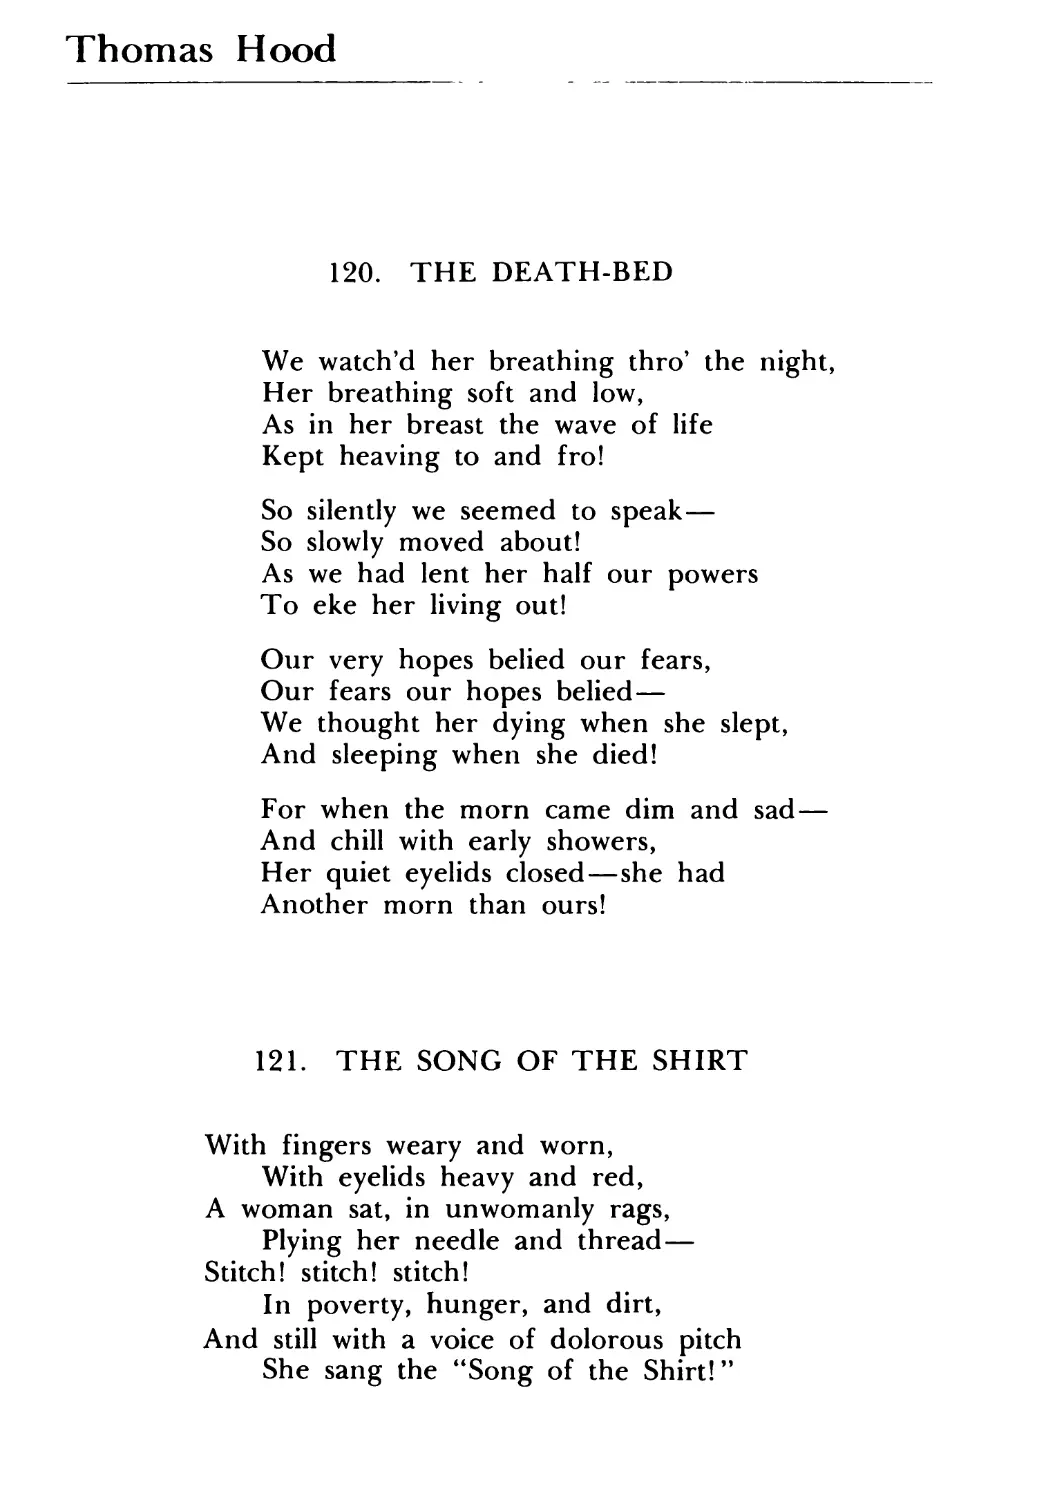 Thomas Hood
121. The Song of the Shirt